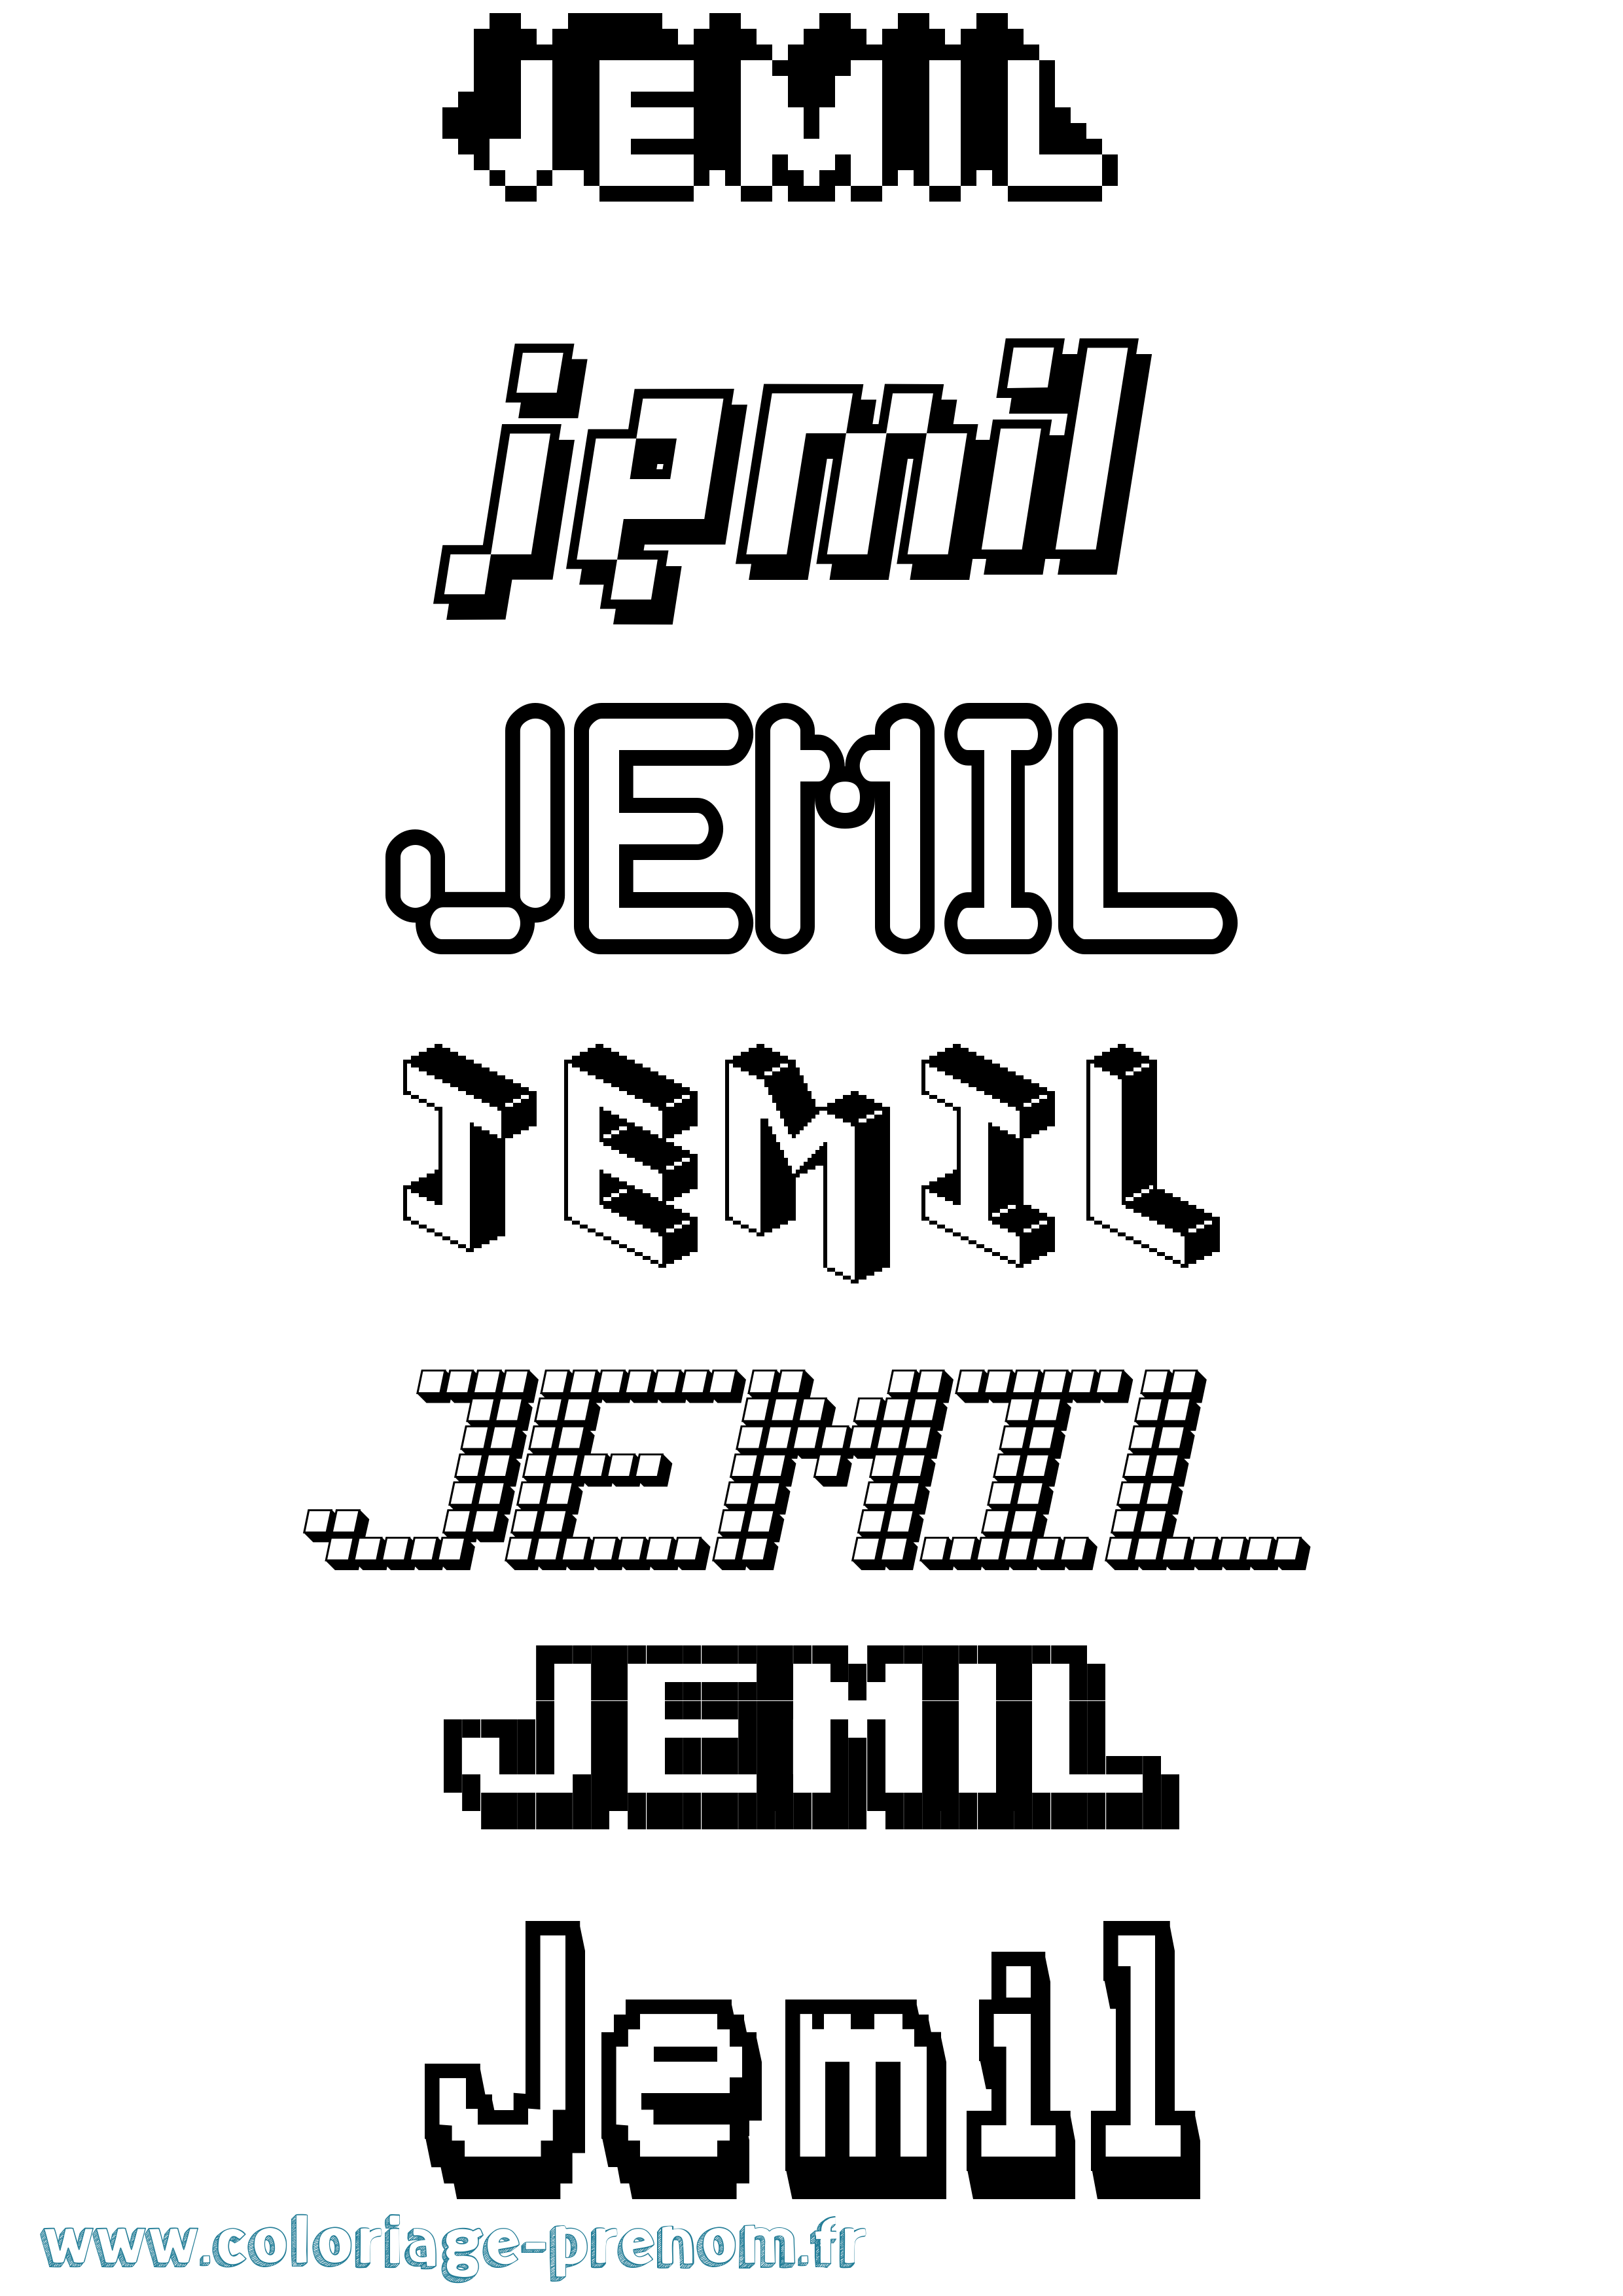 Coloriage prénom Jemil Pixel